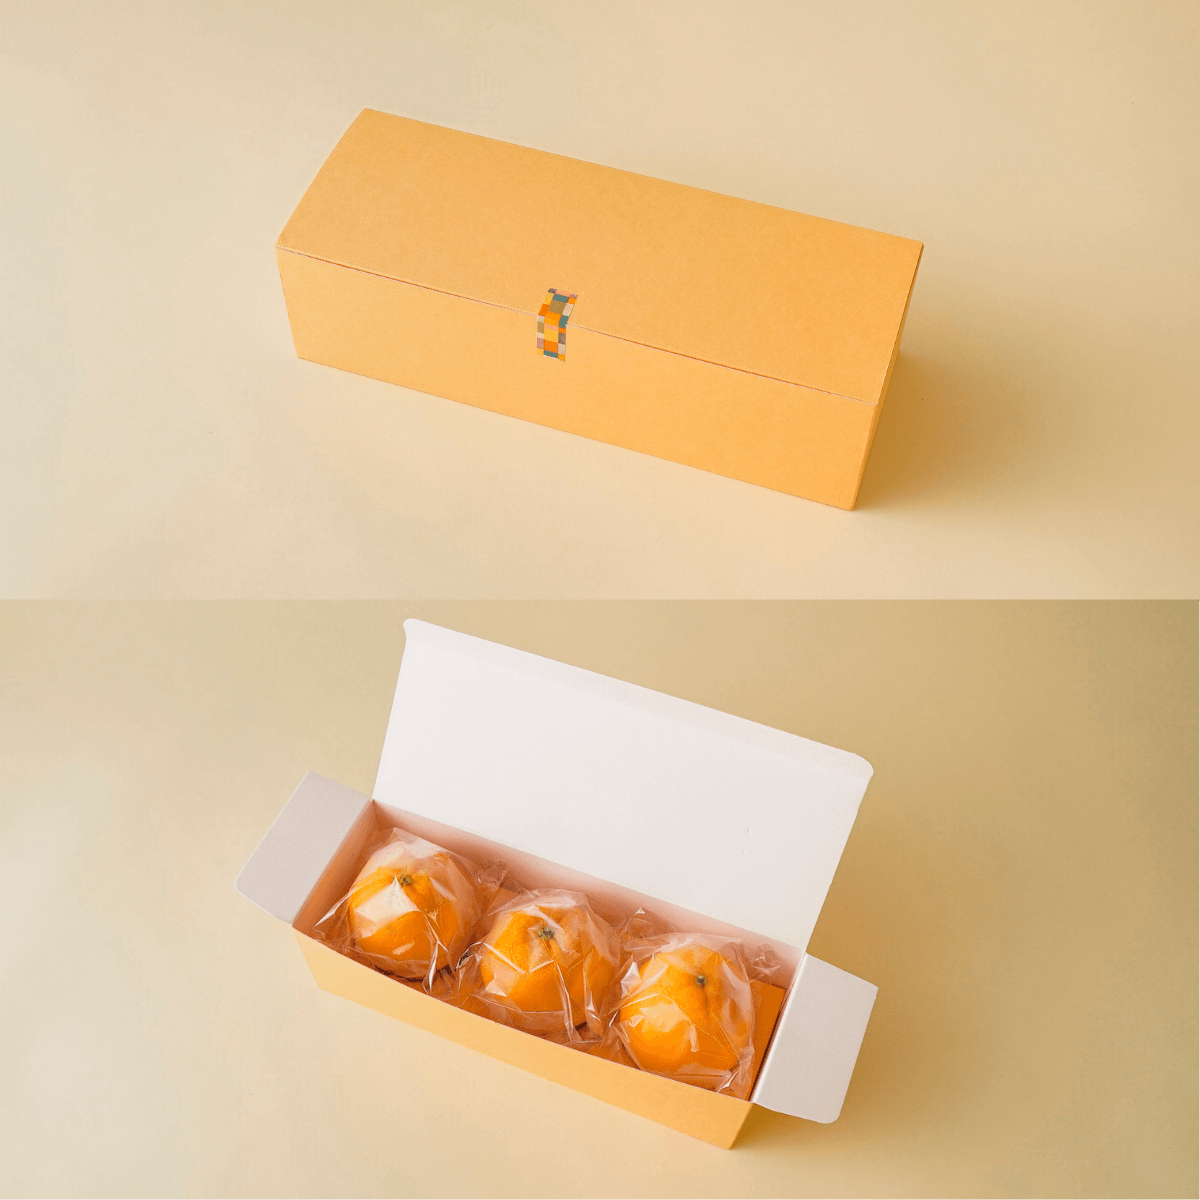 Cake.jp Whole Orange Cake 3PC Set - Tokyo Fresh Direct